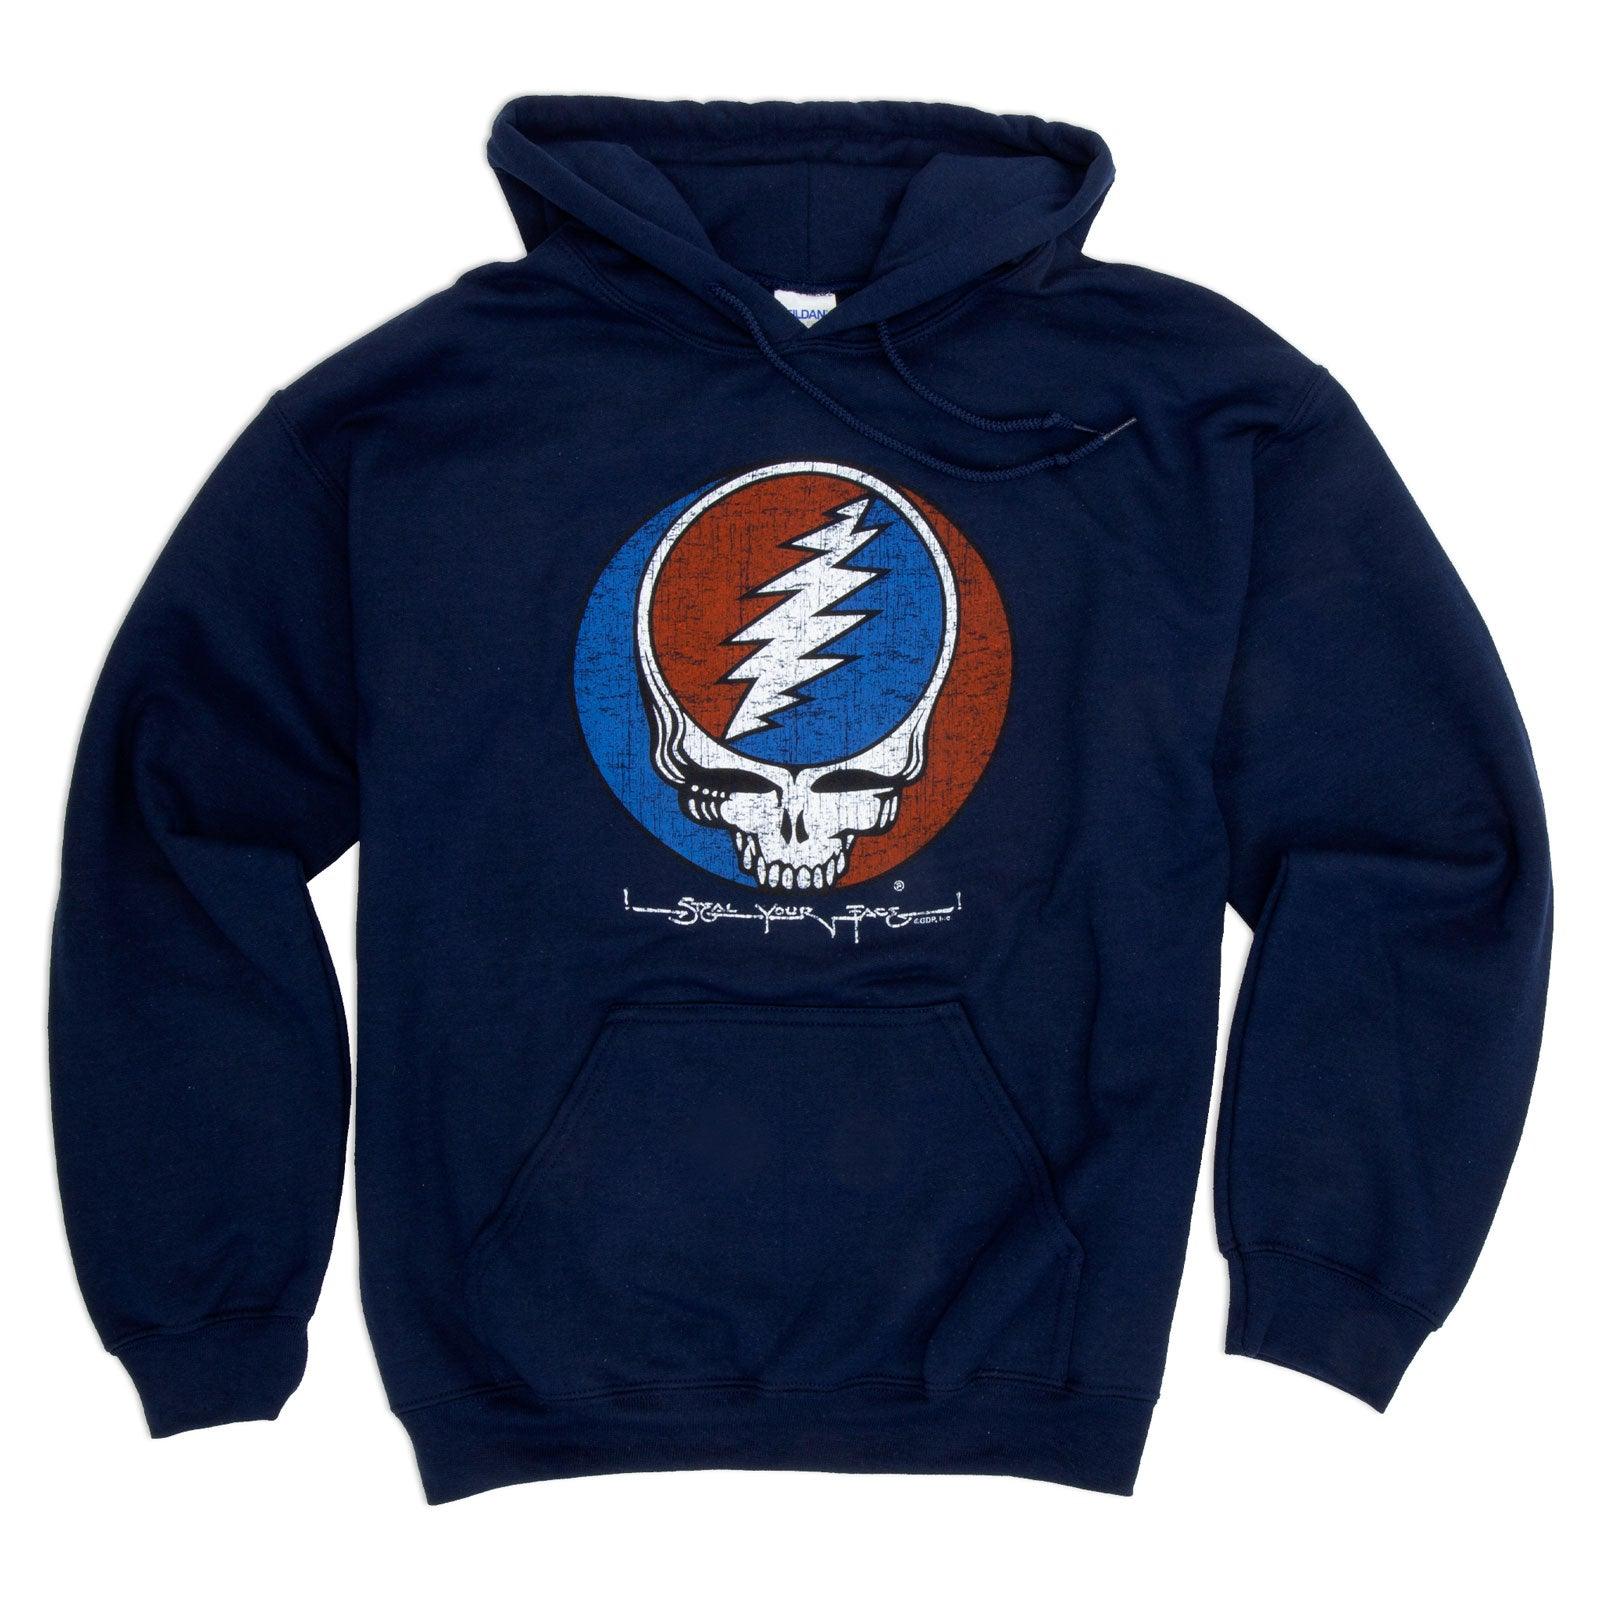 Toronto Blue Jays Grateful Dead Steal Your Base Shirt, hoodie